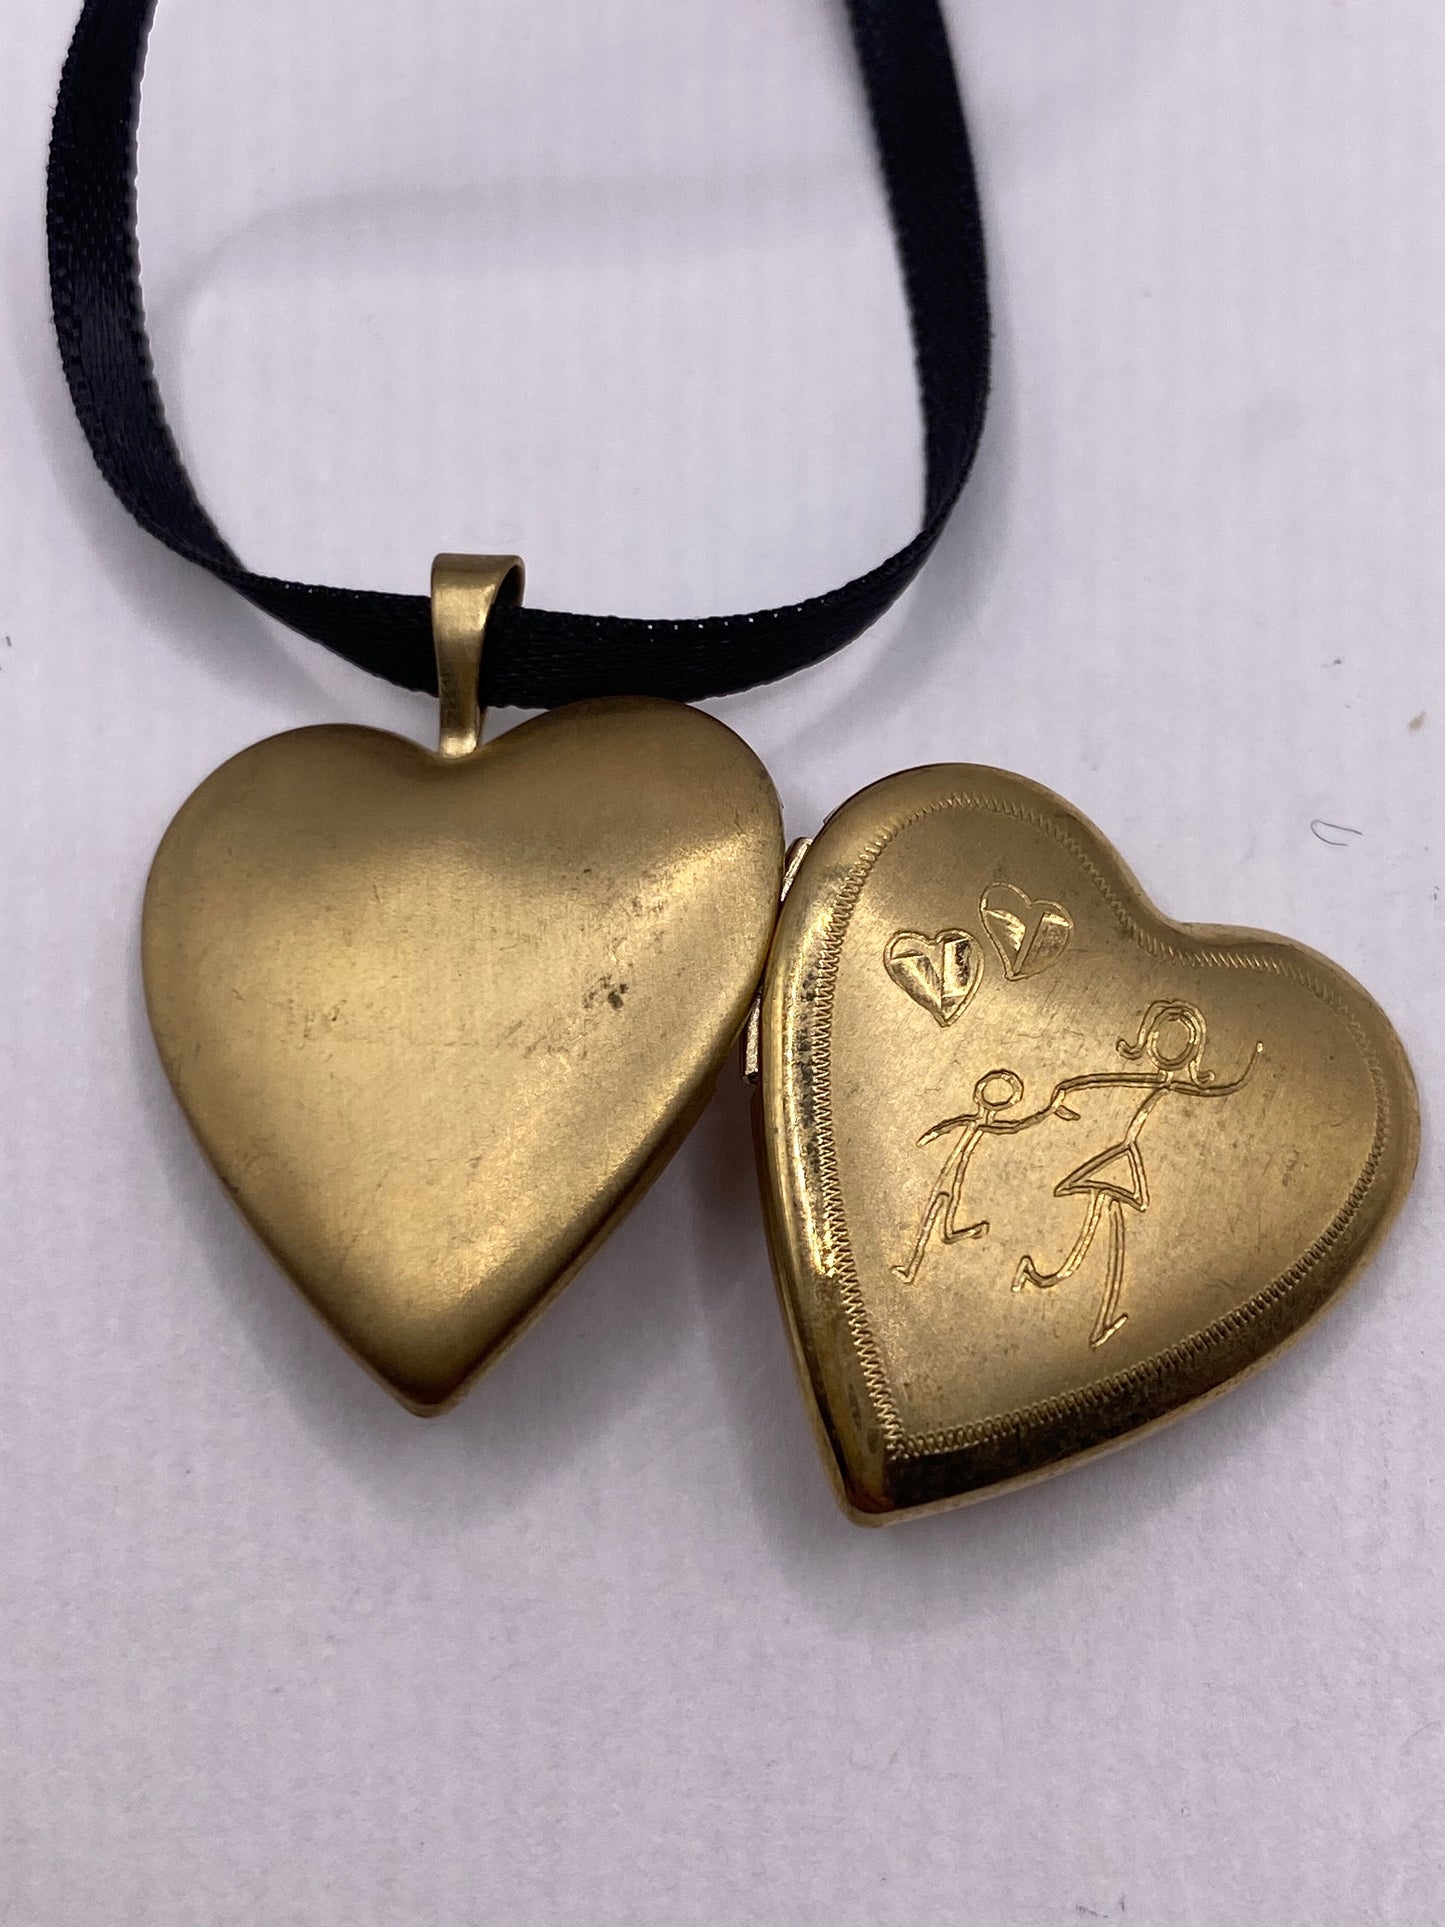 Vintage Gold Locket | Tiny Heart 9k Gold Filled Pendant Photo Memory Charm Engraved Mother Child Hearts Big Sister | Choker Necklace